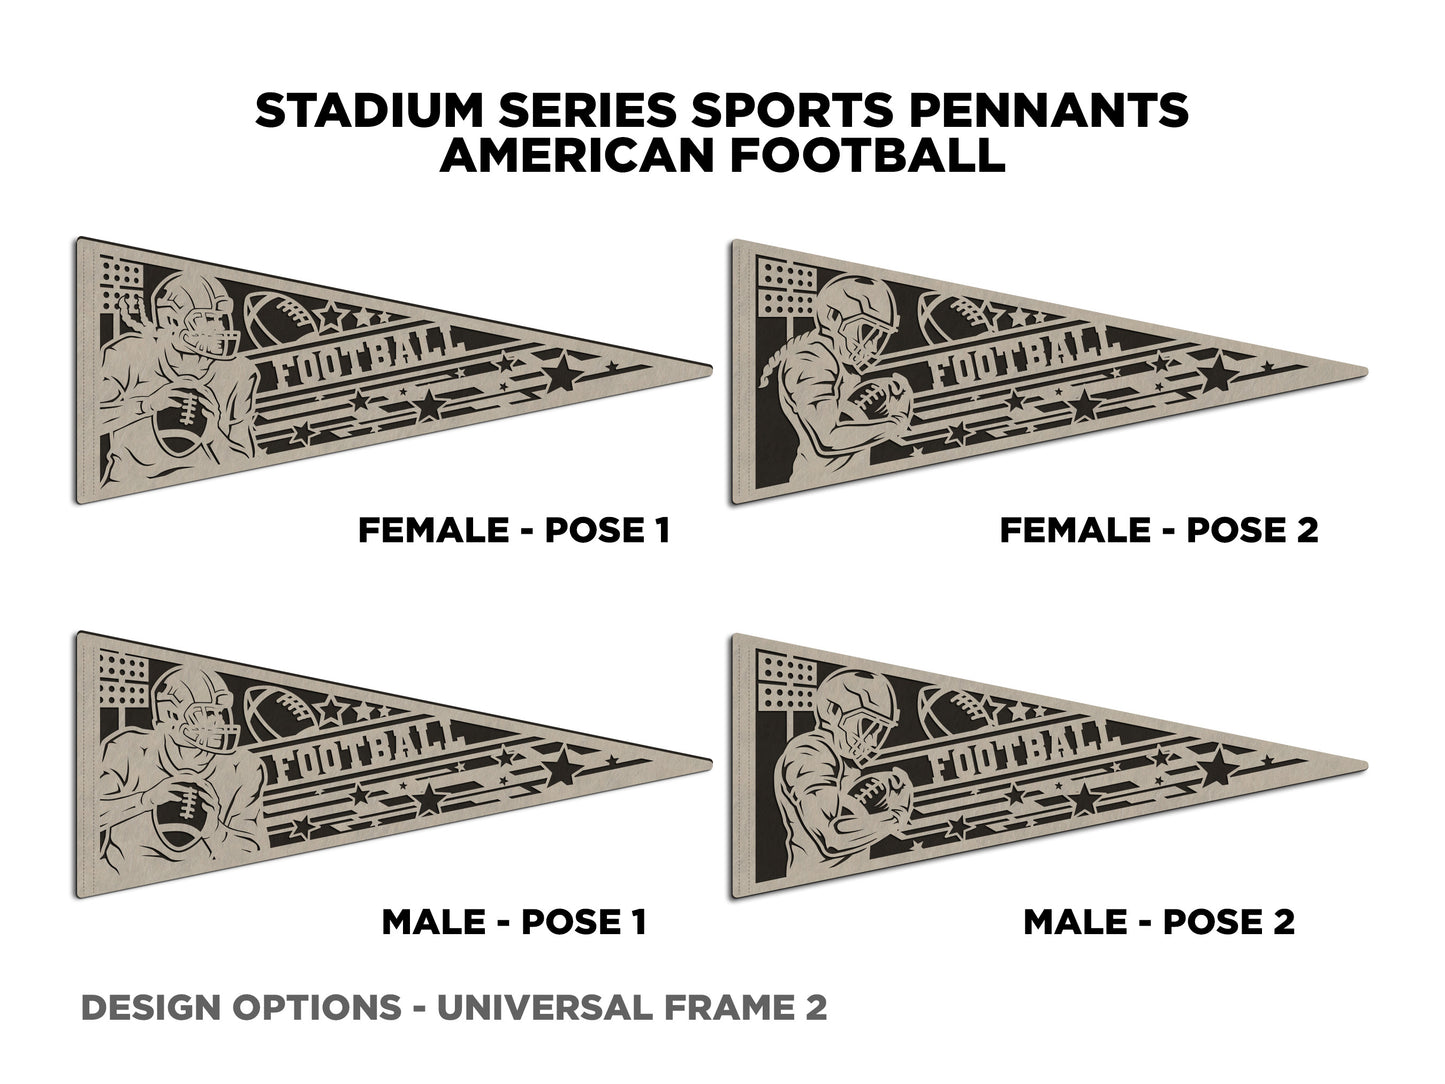 Stadium Series Sports Pennants - Football - 12 Variations Included - Male and Female Options - Tested on Glowforge & Lightburn